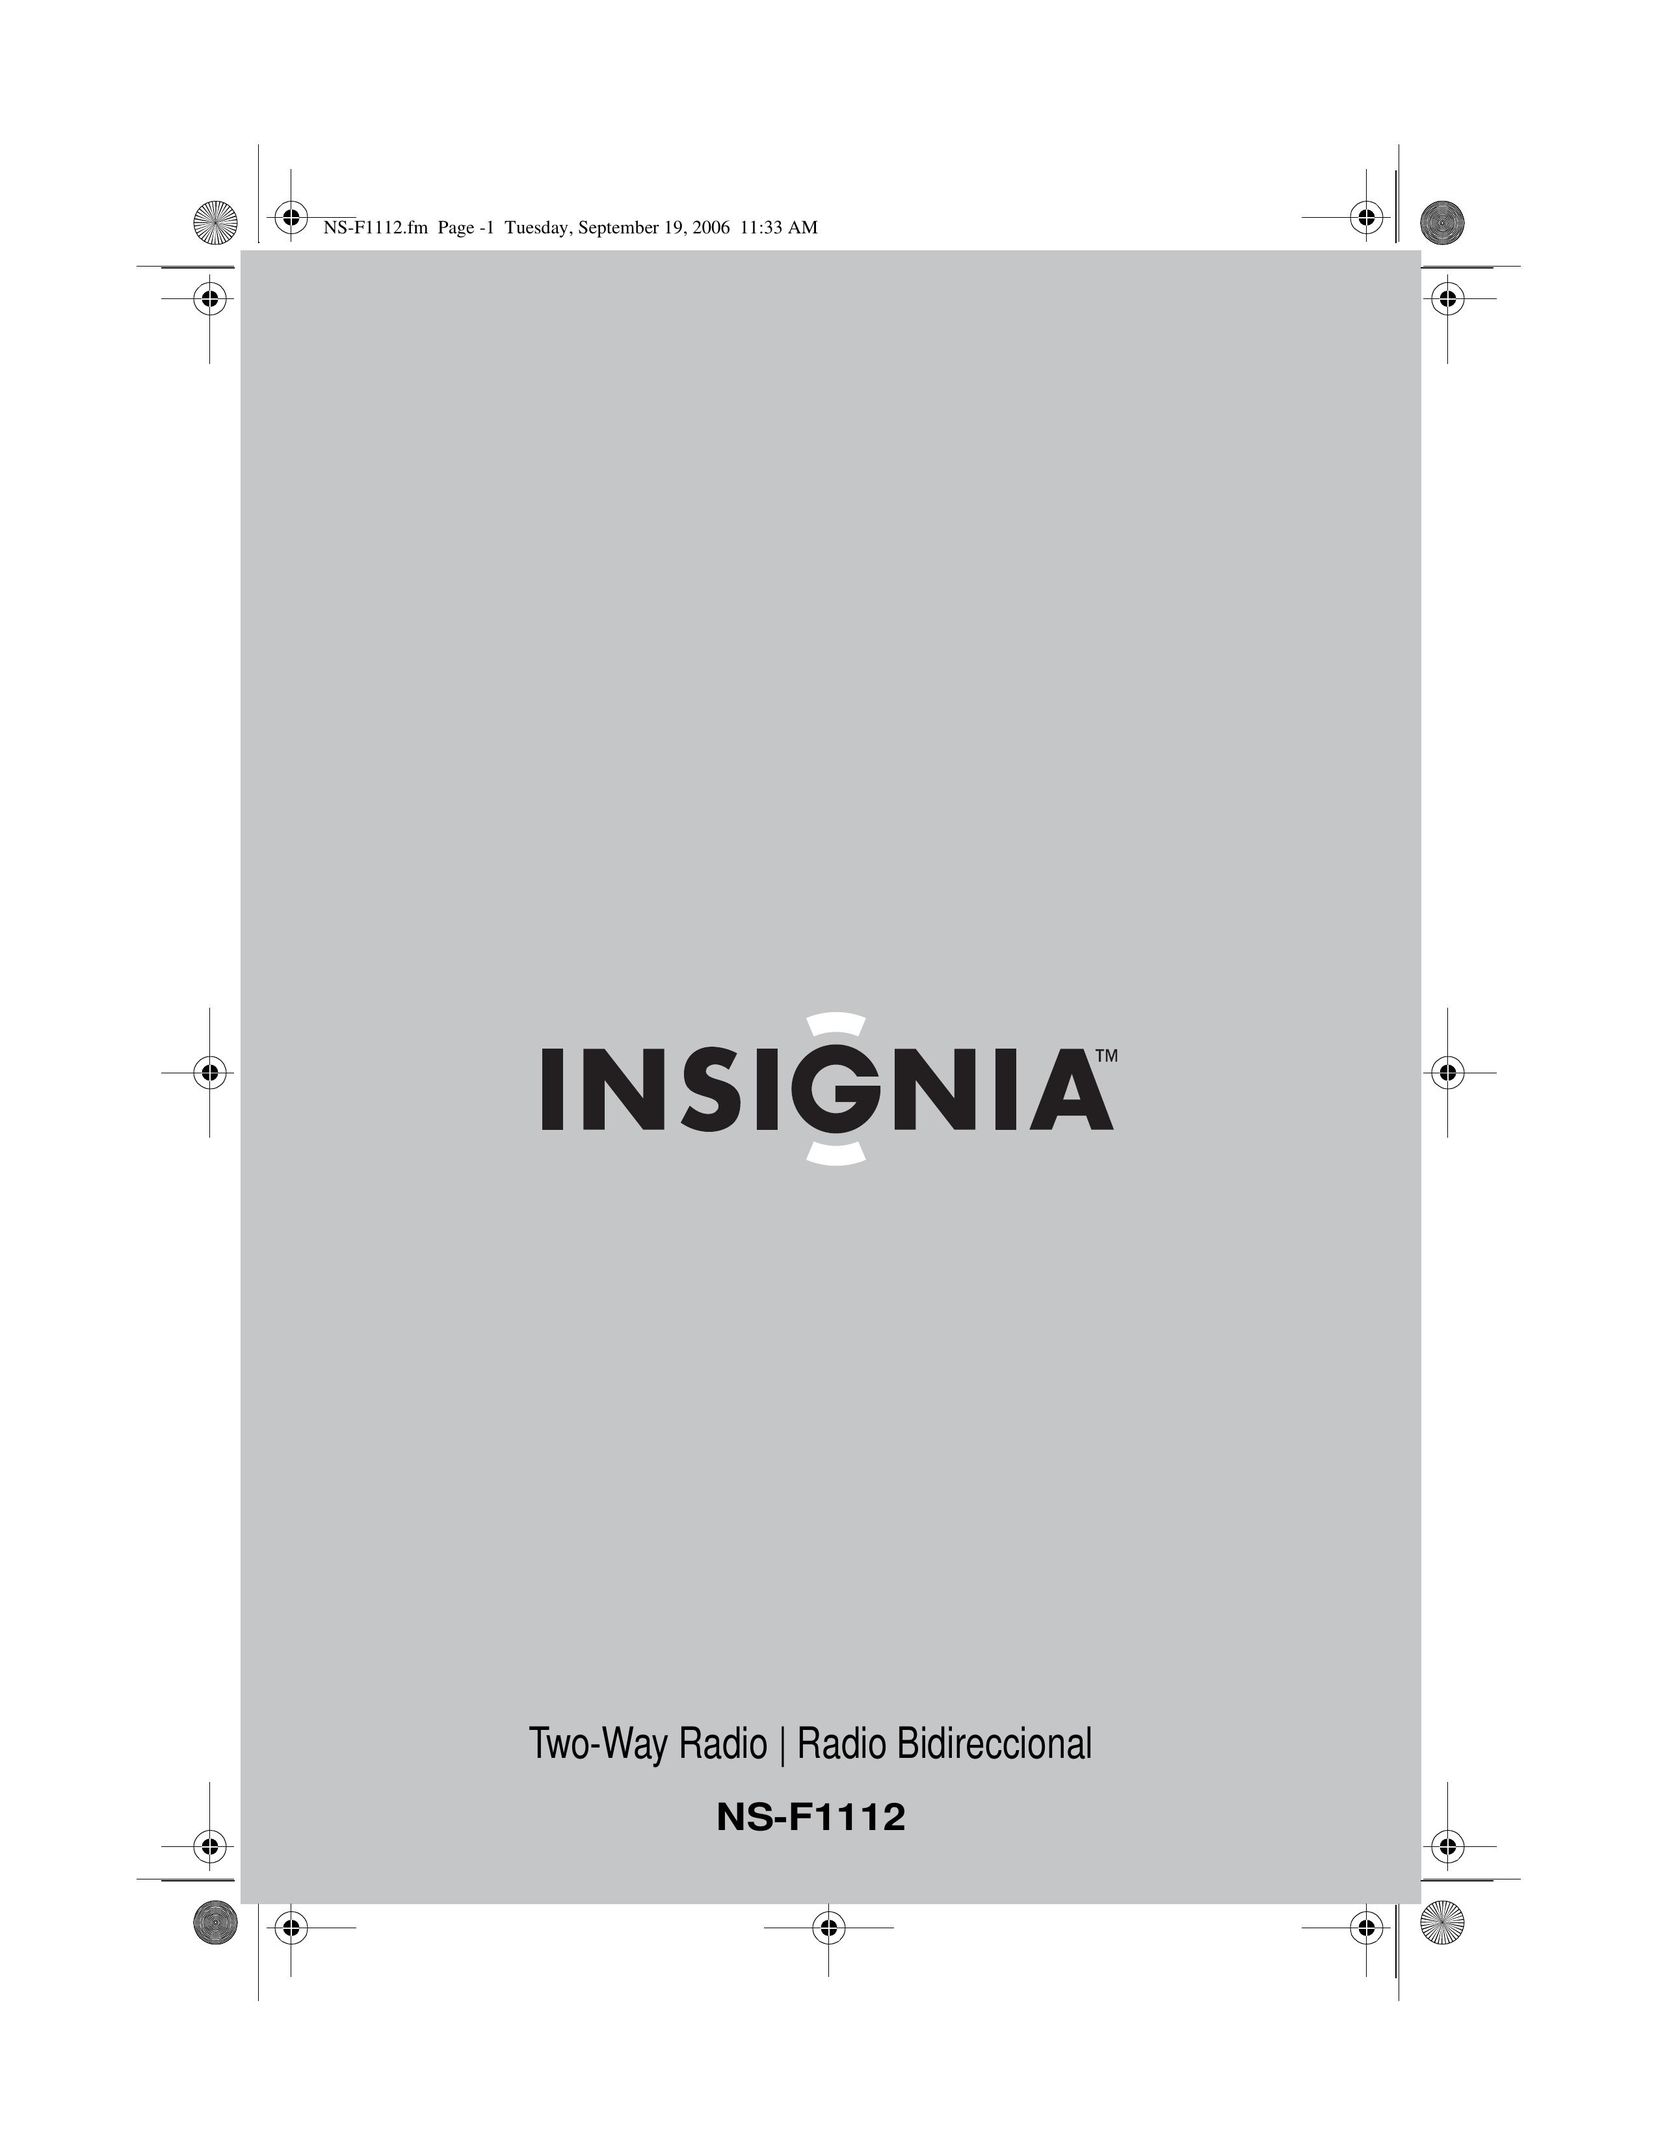 Insignia NS-F1112 Two-Way Radio User Manual